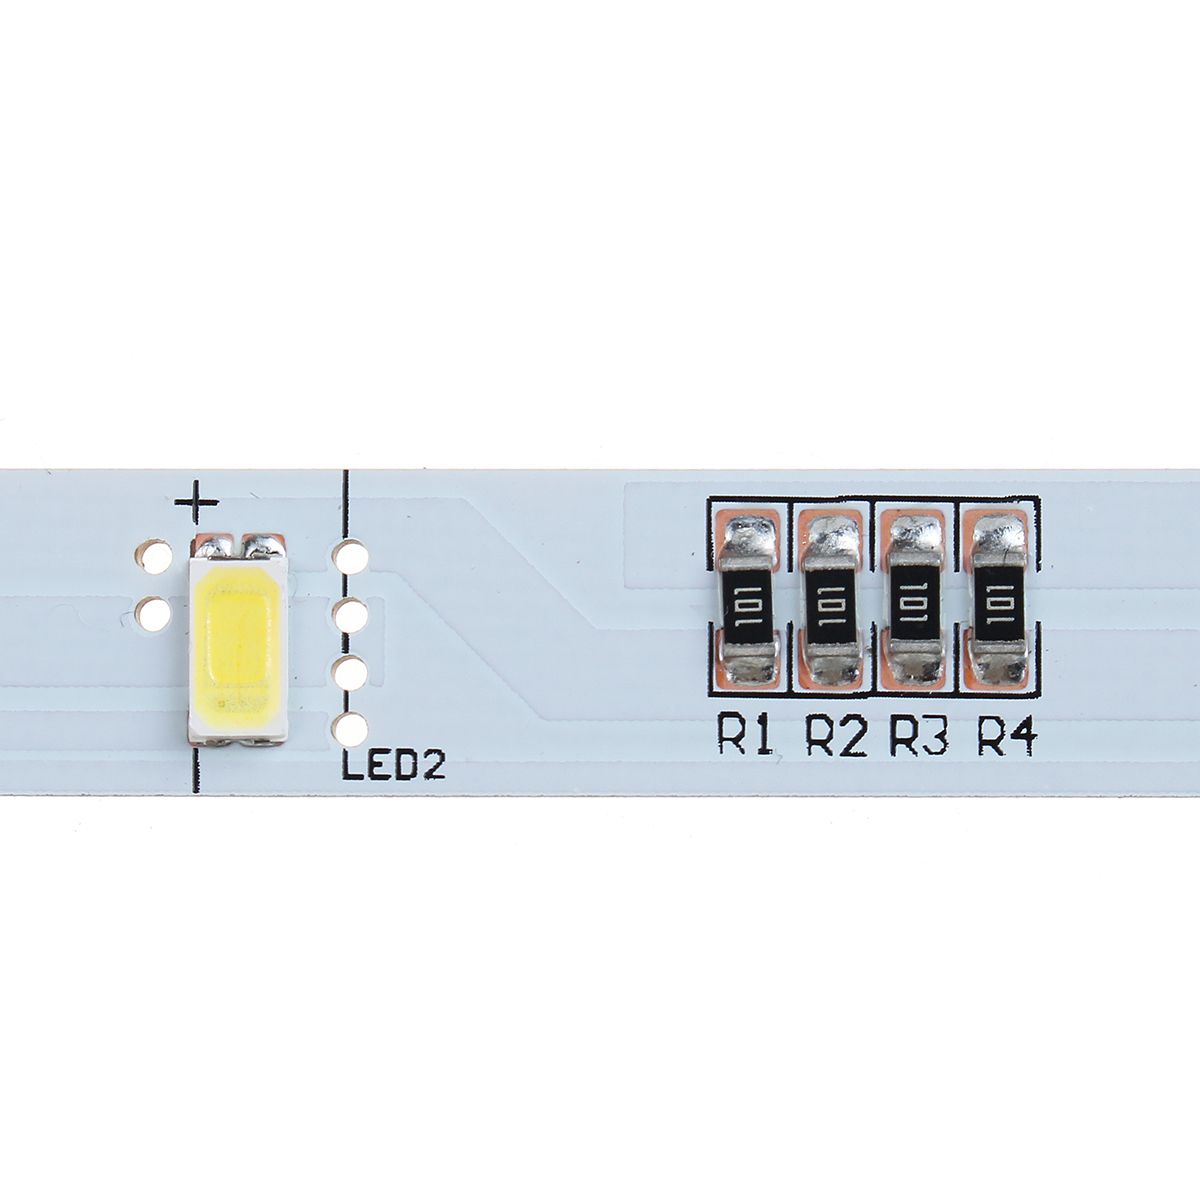 DC12V-2W-LED-Strip-Light-for-RongshengHisense-Refrigerator-E349766-MDDZ-162A-1629348-1629234